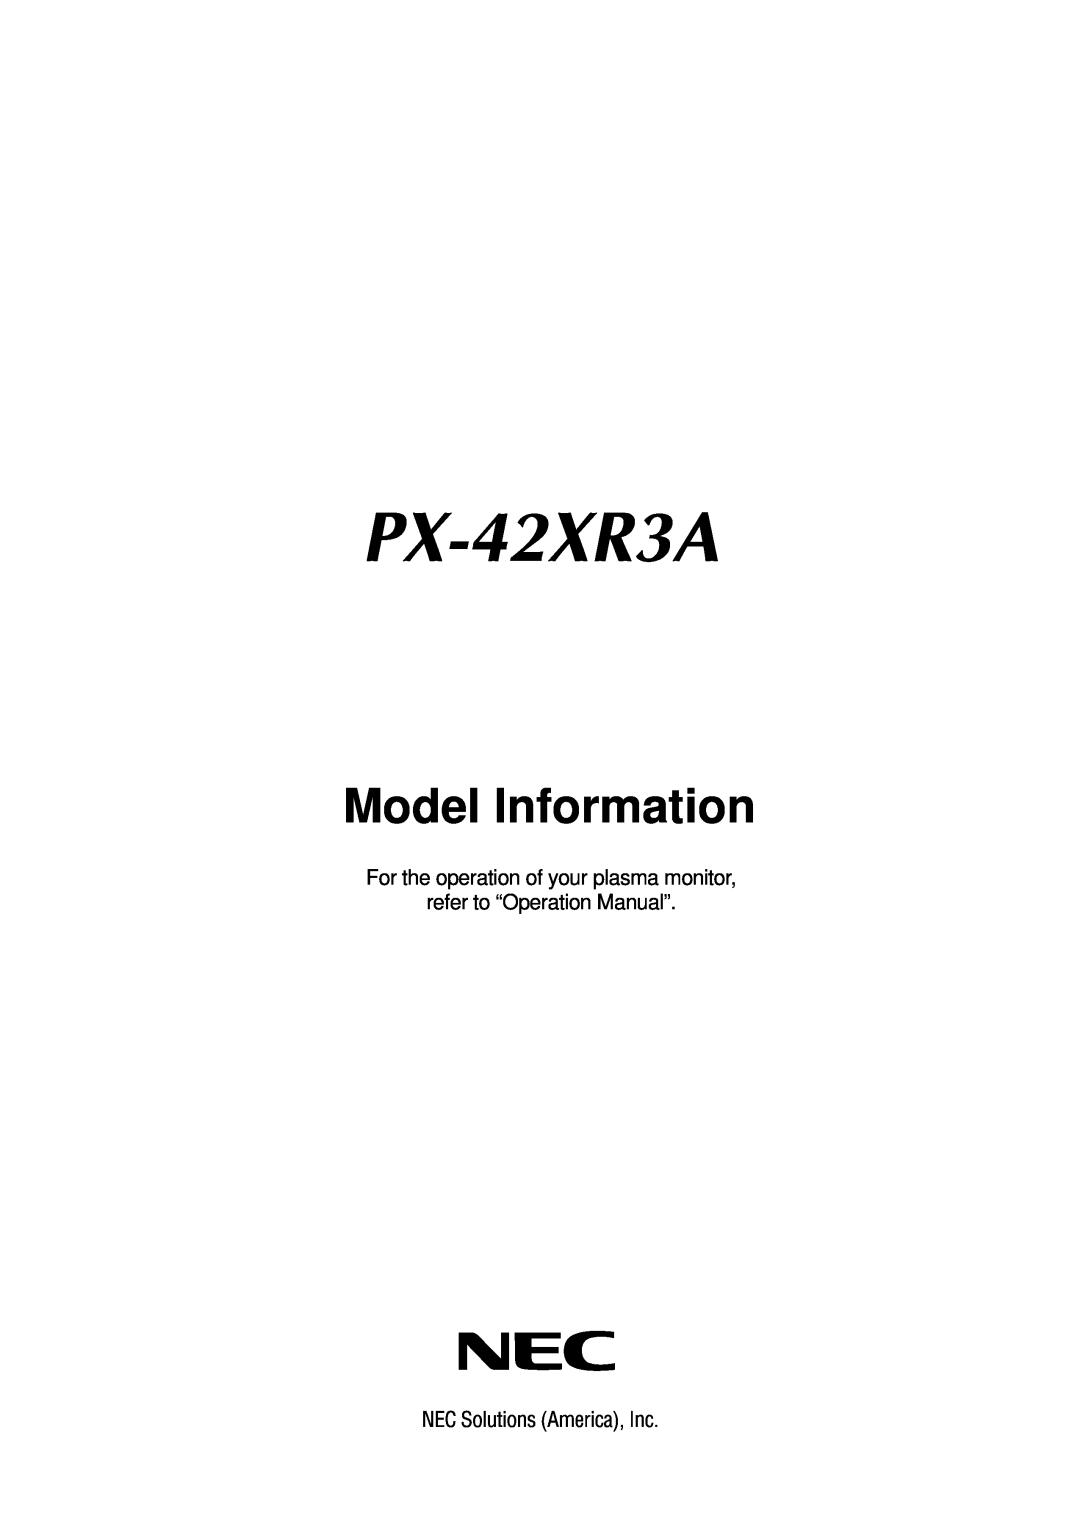 NEC PX-42XR3A operation manual Model Information, NEC Solutions America, Inc 